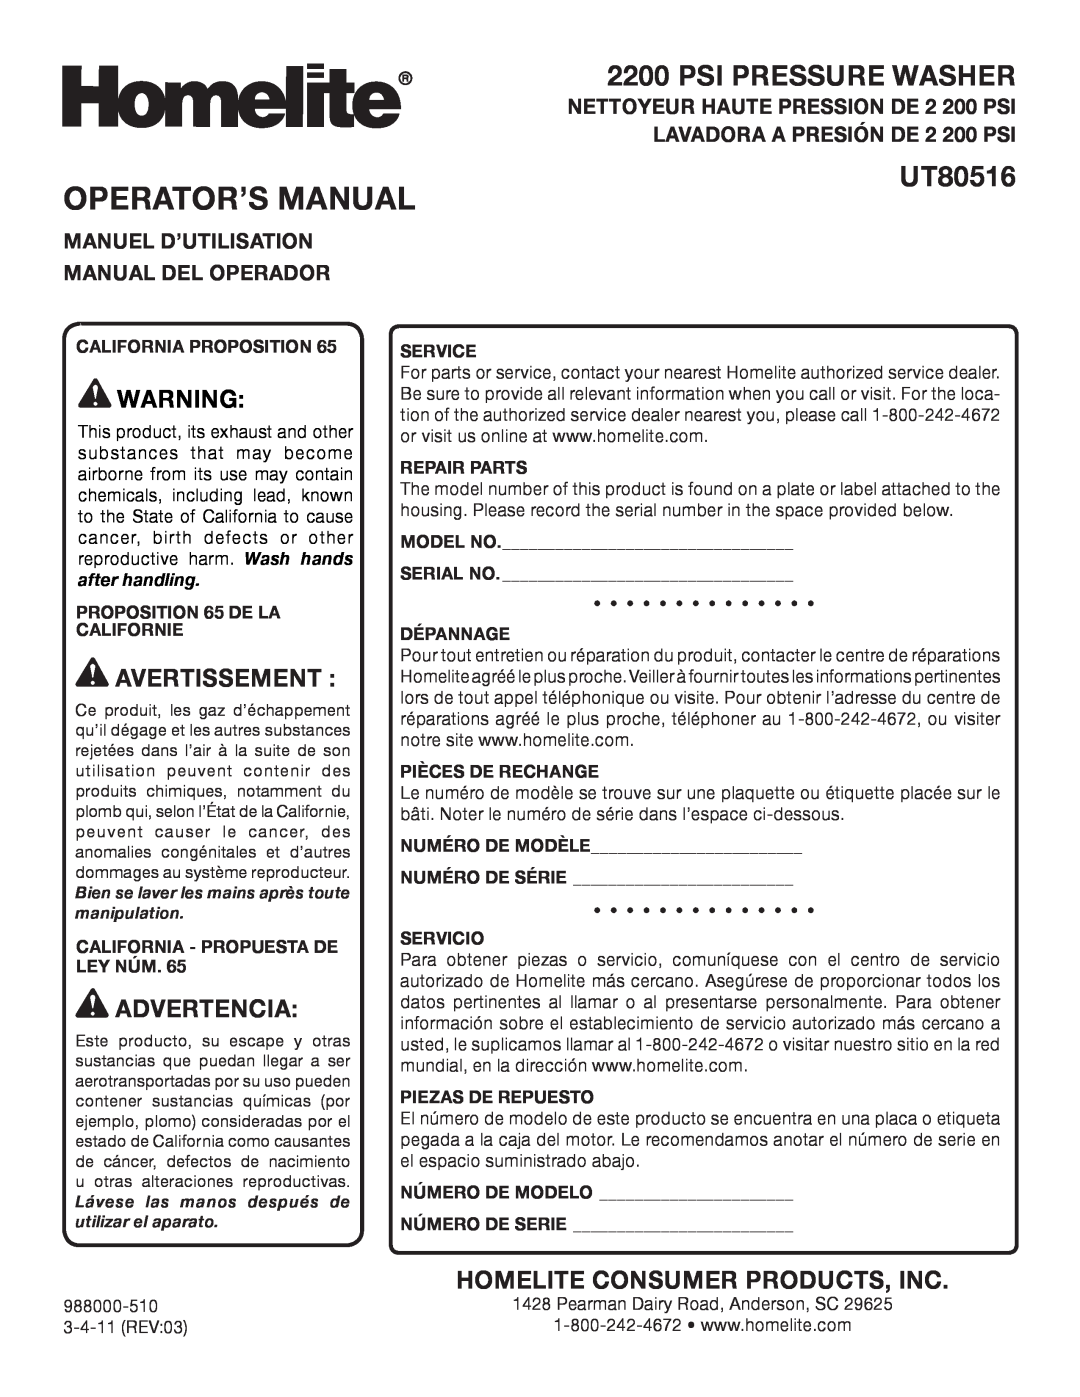 Homelite UT80516 Operator’S Manual, Psi Pressure Washer, Avertissement , Advertencia, Homelite Consumer Products, Inc 